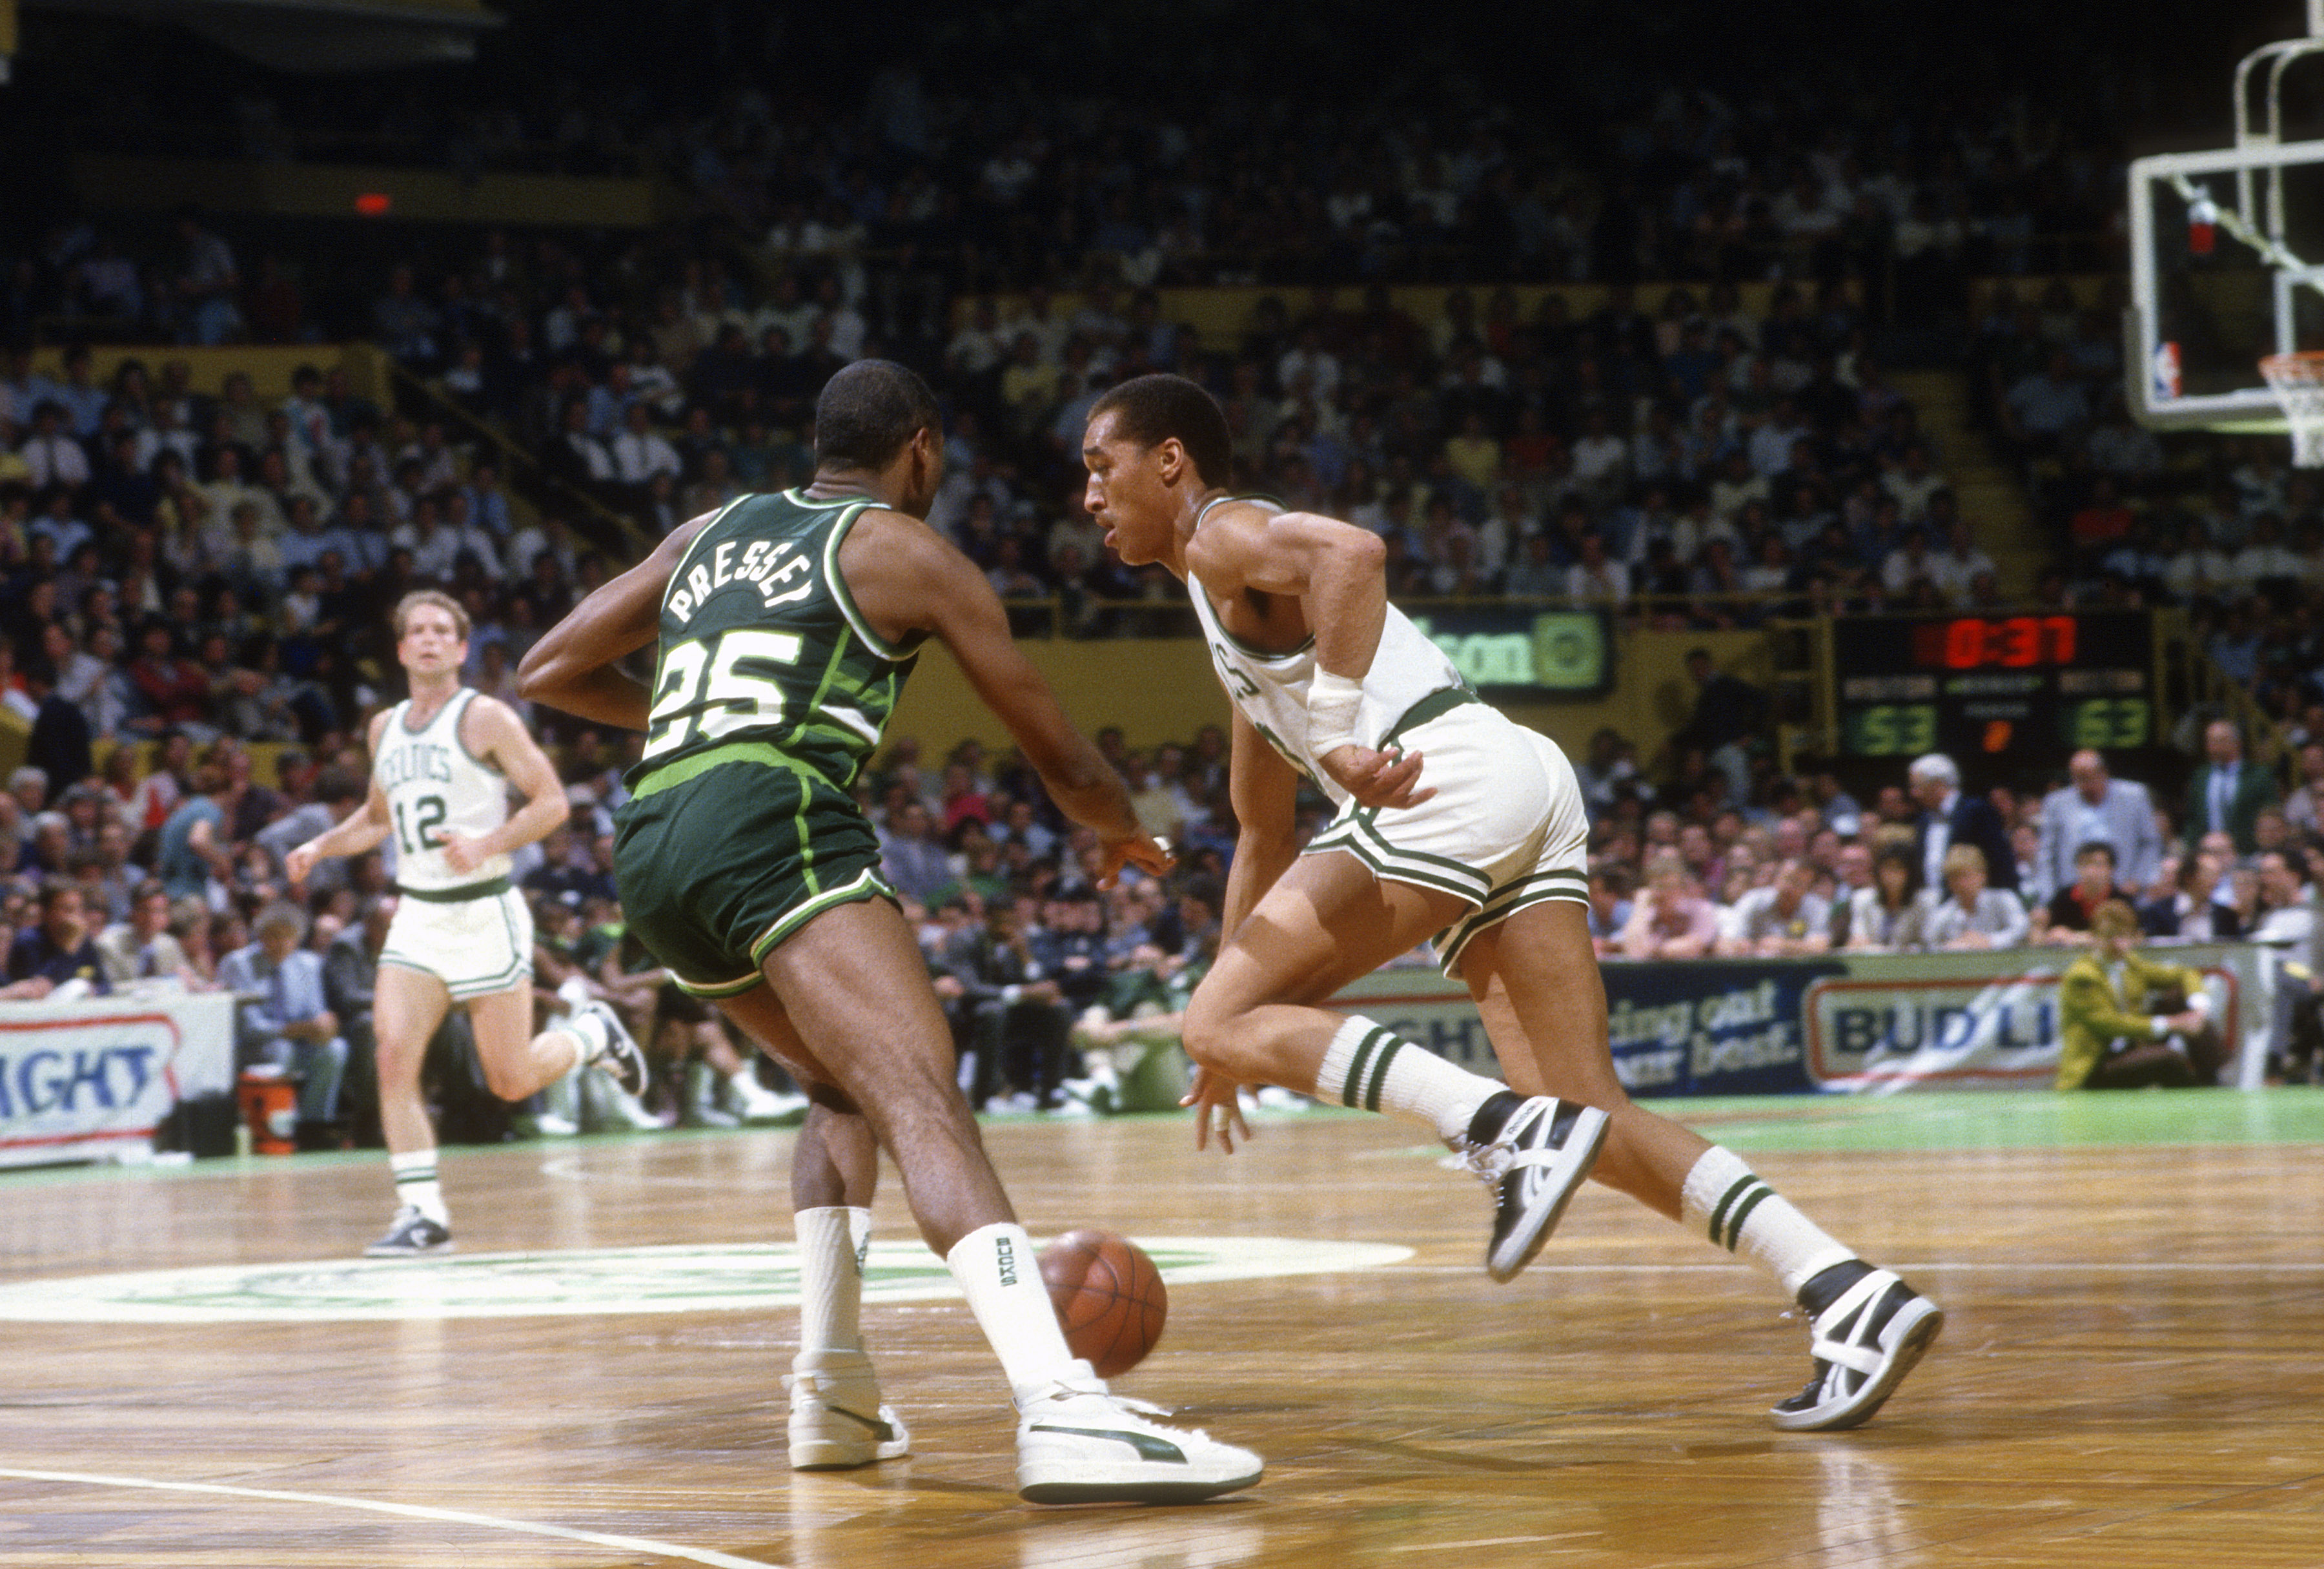 Dennis Johnson of the Boston Celtics drives on Paul Pressey of the Milwaukee Bucks during an NBA basketball game circa 1986 at the Boston Garden.